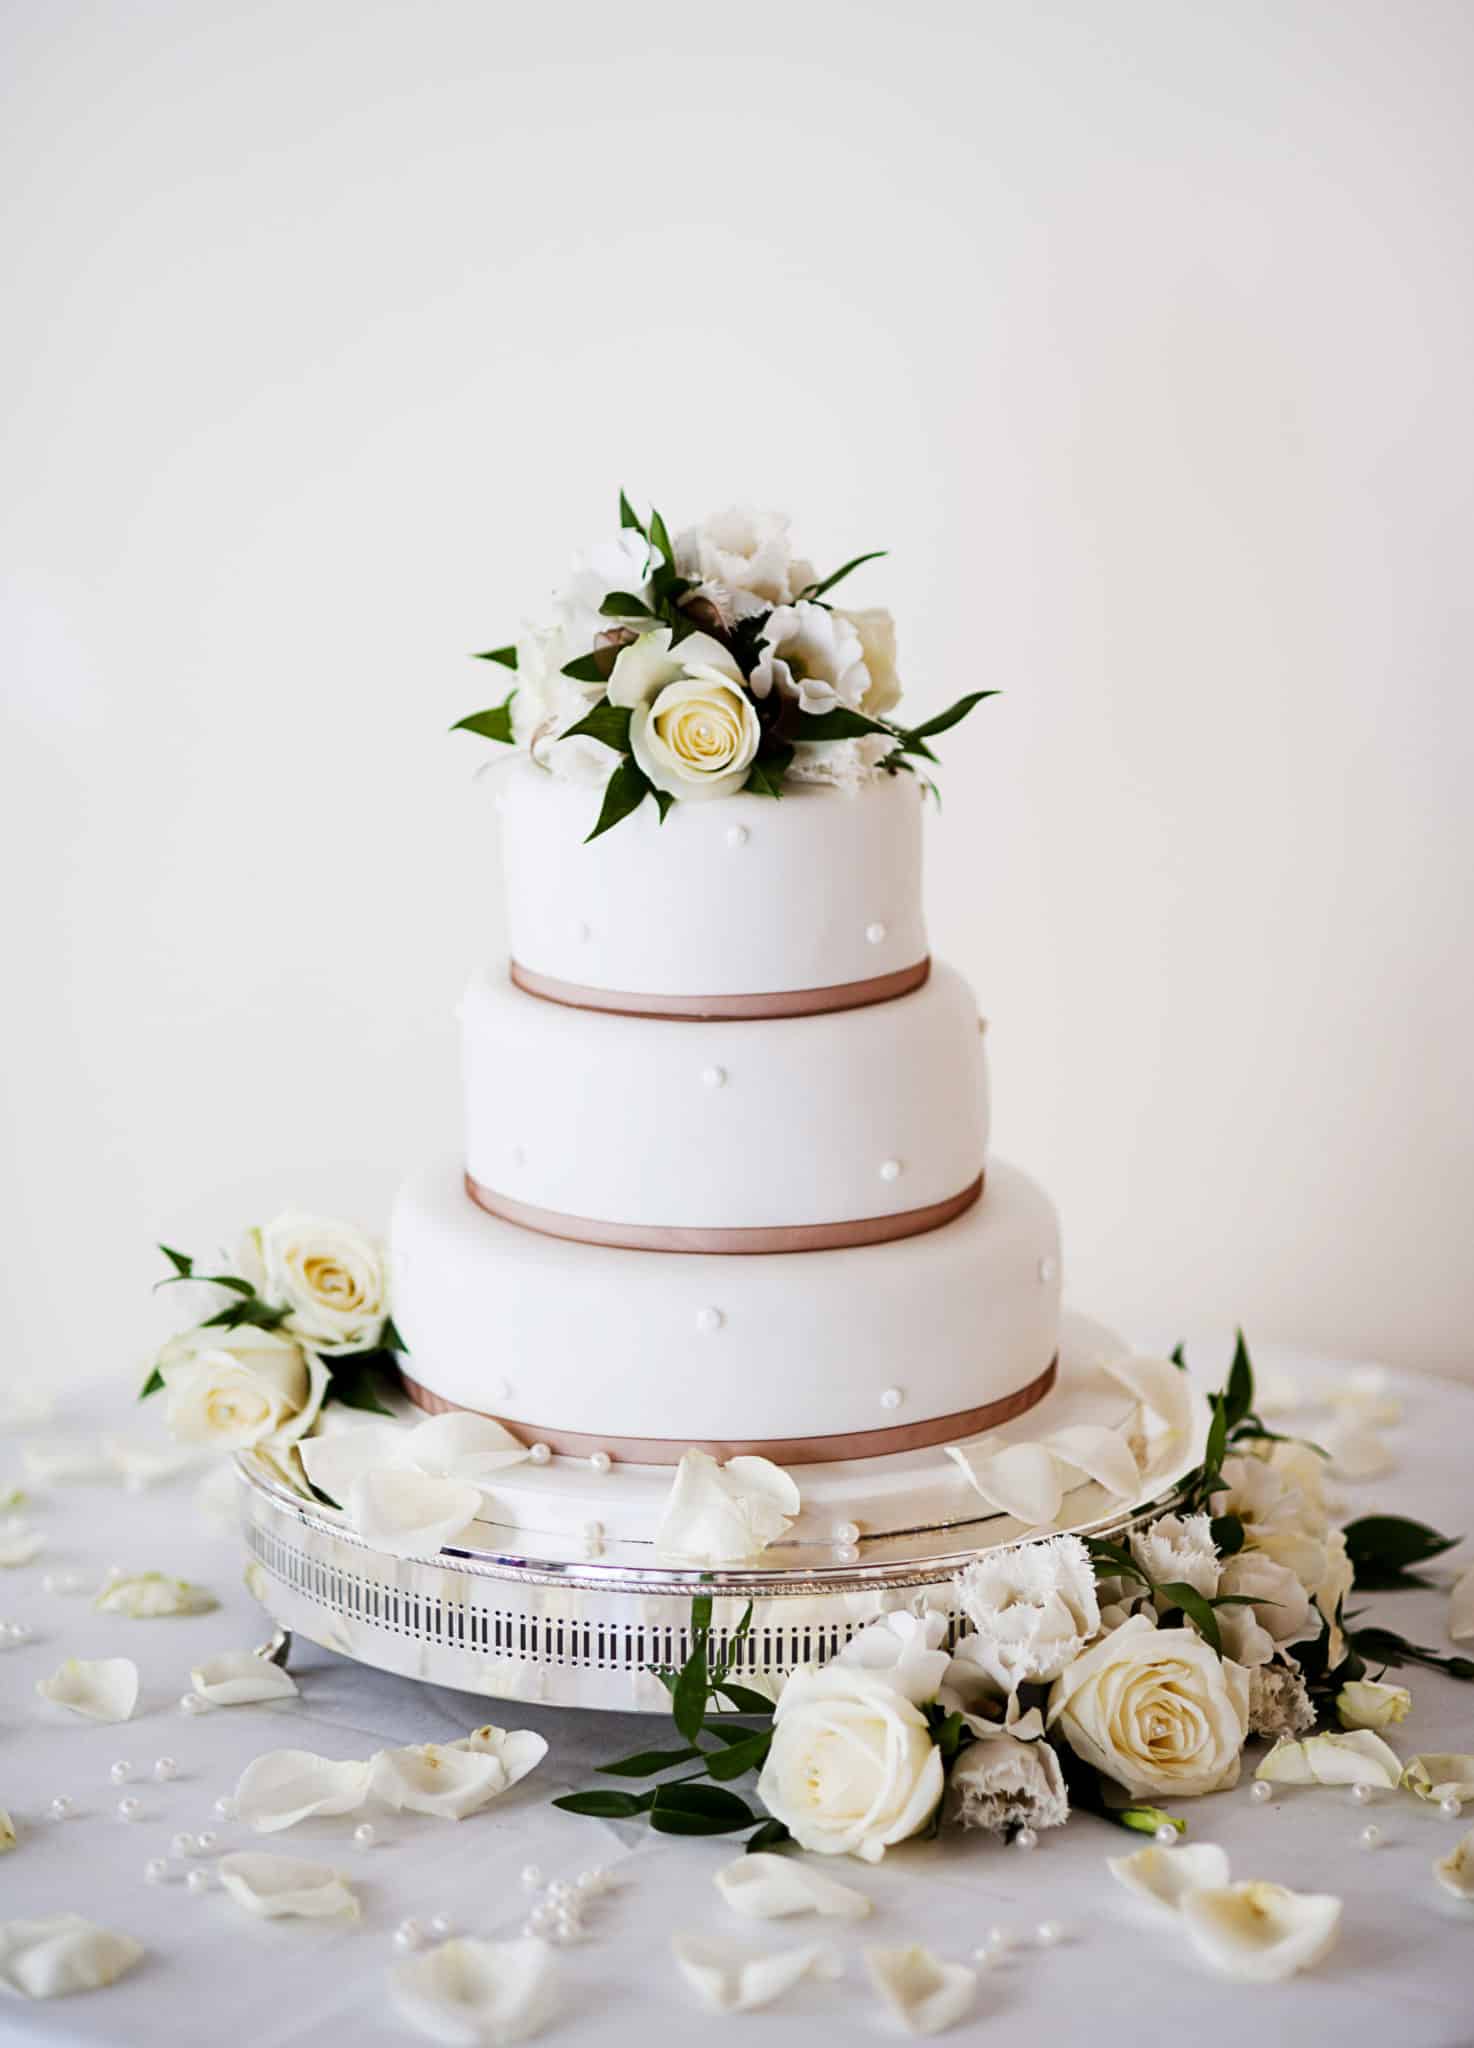 22 Decadent Fall Wedding Cakes - Gorgeous Fall Wedding Cake Ideas